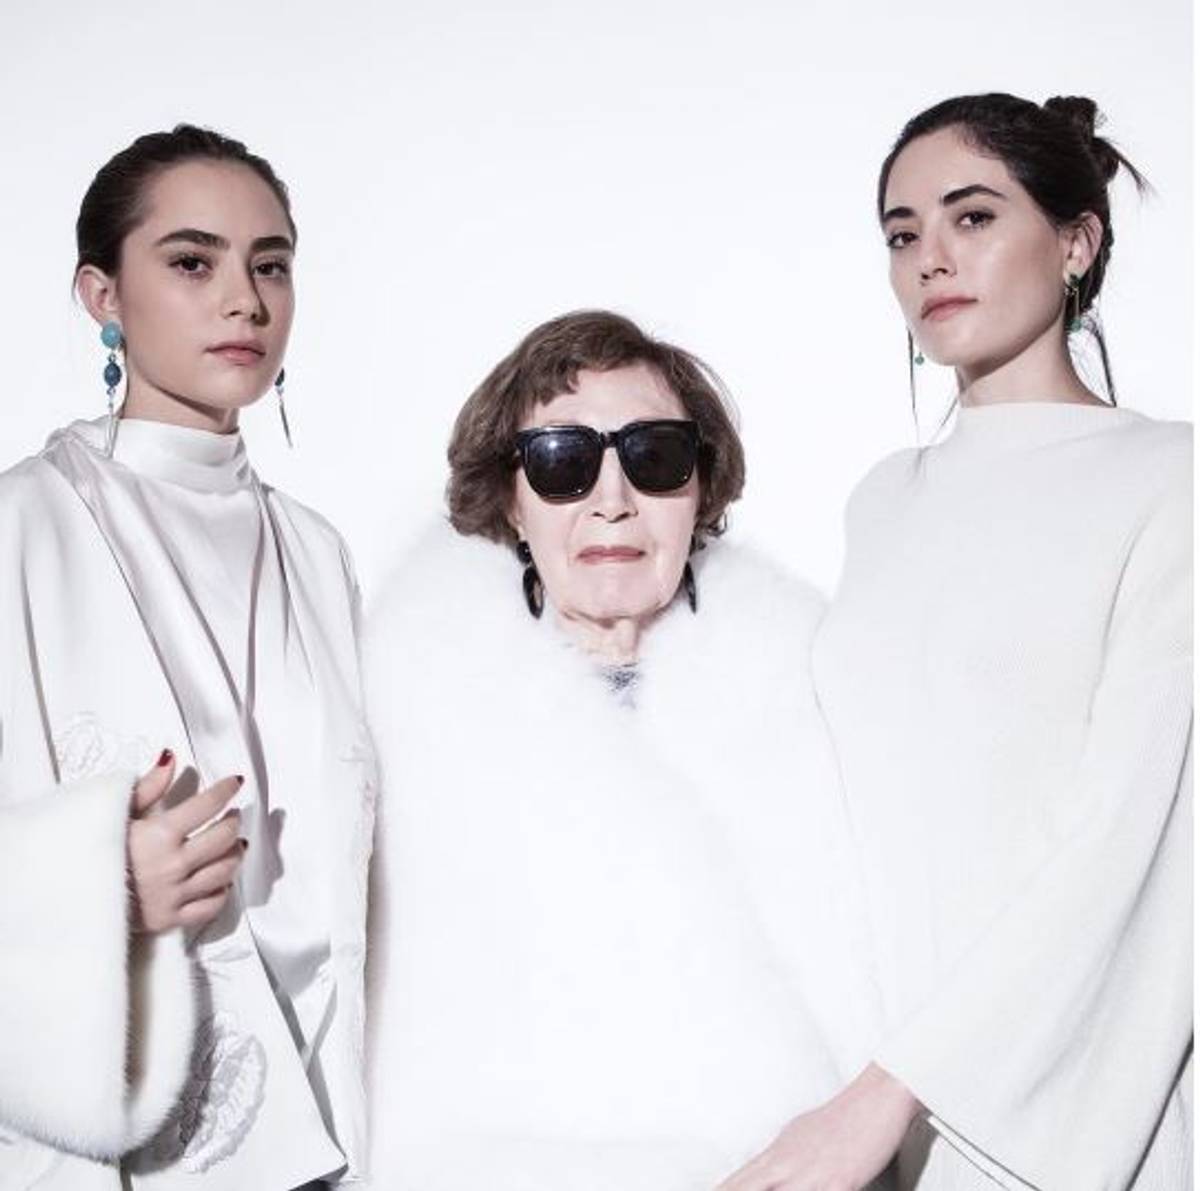 Maya Reik (L) with her grandmother and sister, Lauren. (Instagram)